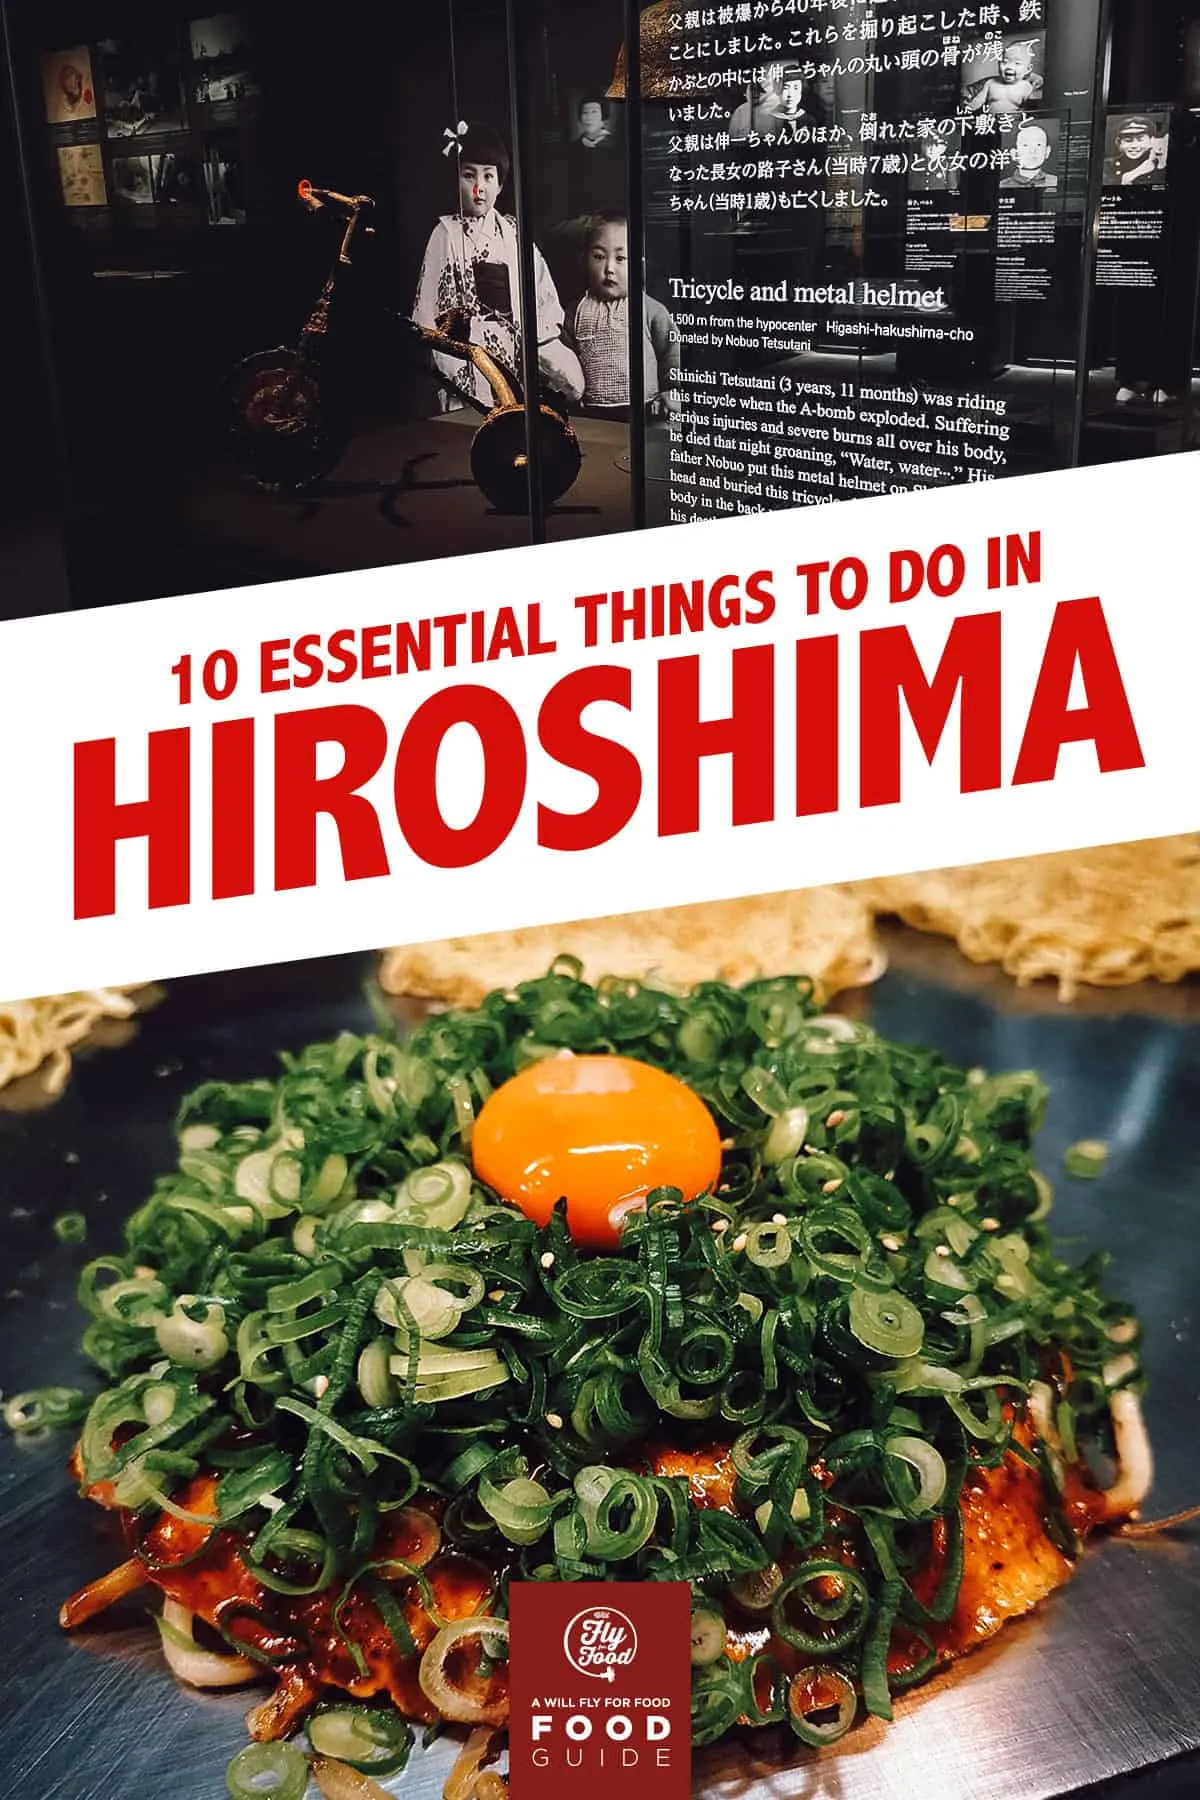 Hirsohima Peace Memorial Museum and okonomiyaki